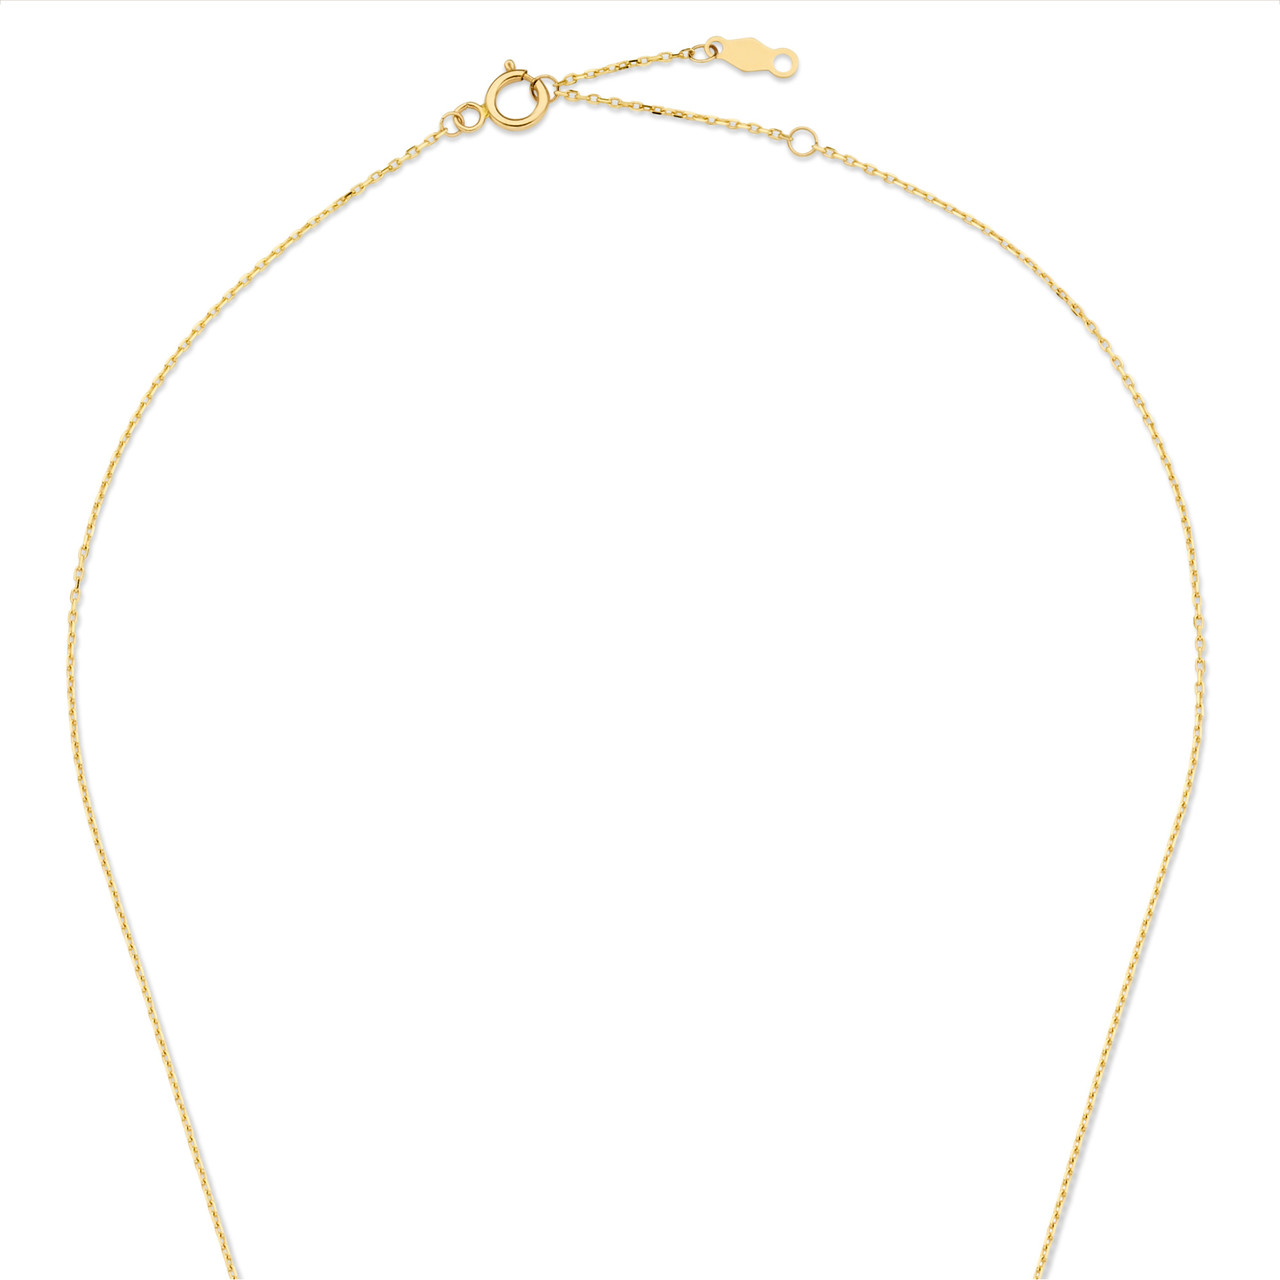 Isabel IB340138 necklace Bernard - karat 14 gold